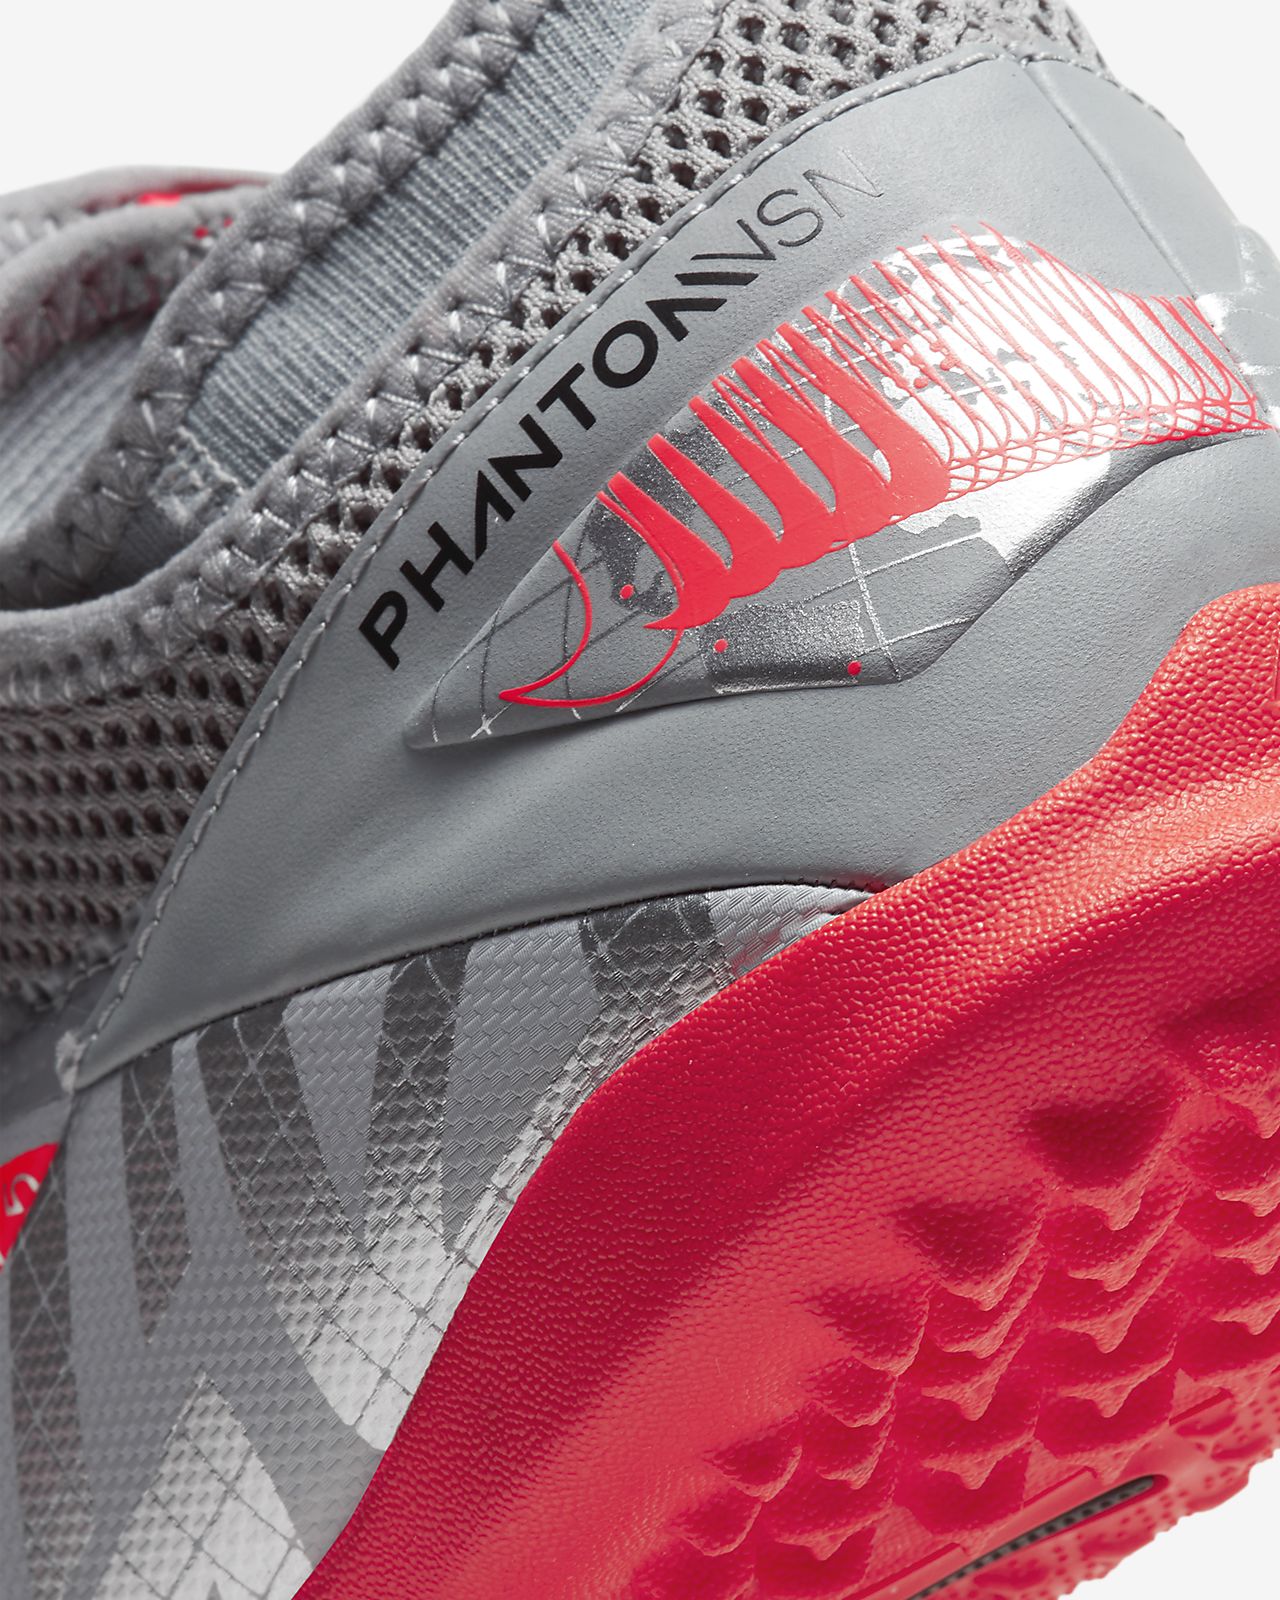 Nike Phantom Vision Academy Dynamic Fit Turf Football Shoe .